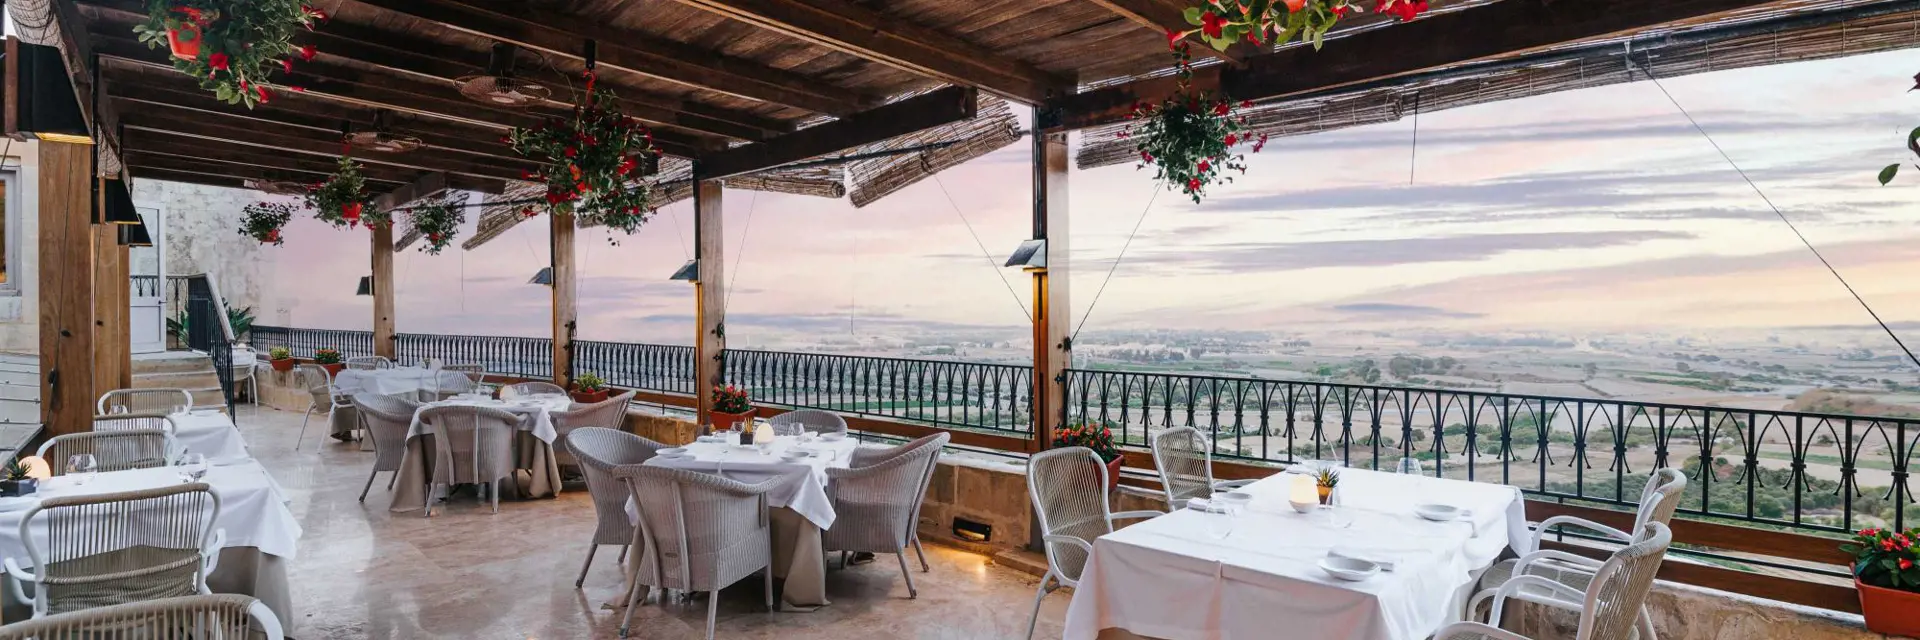 the xara palace malta restaurant view